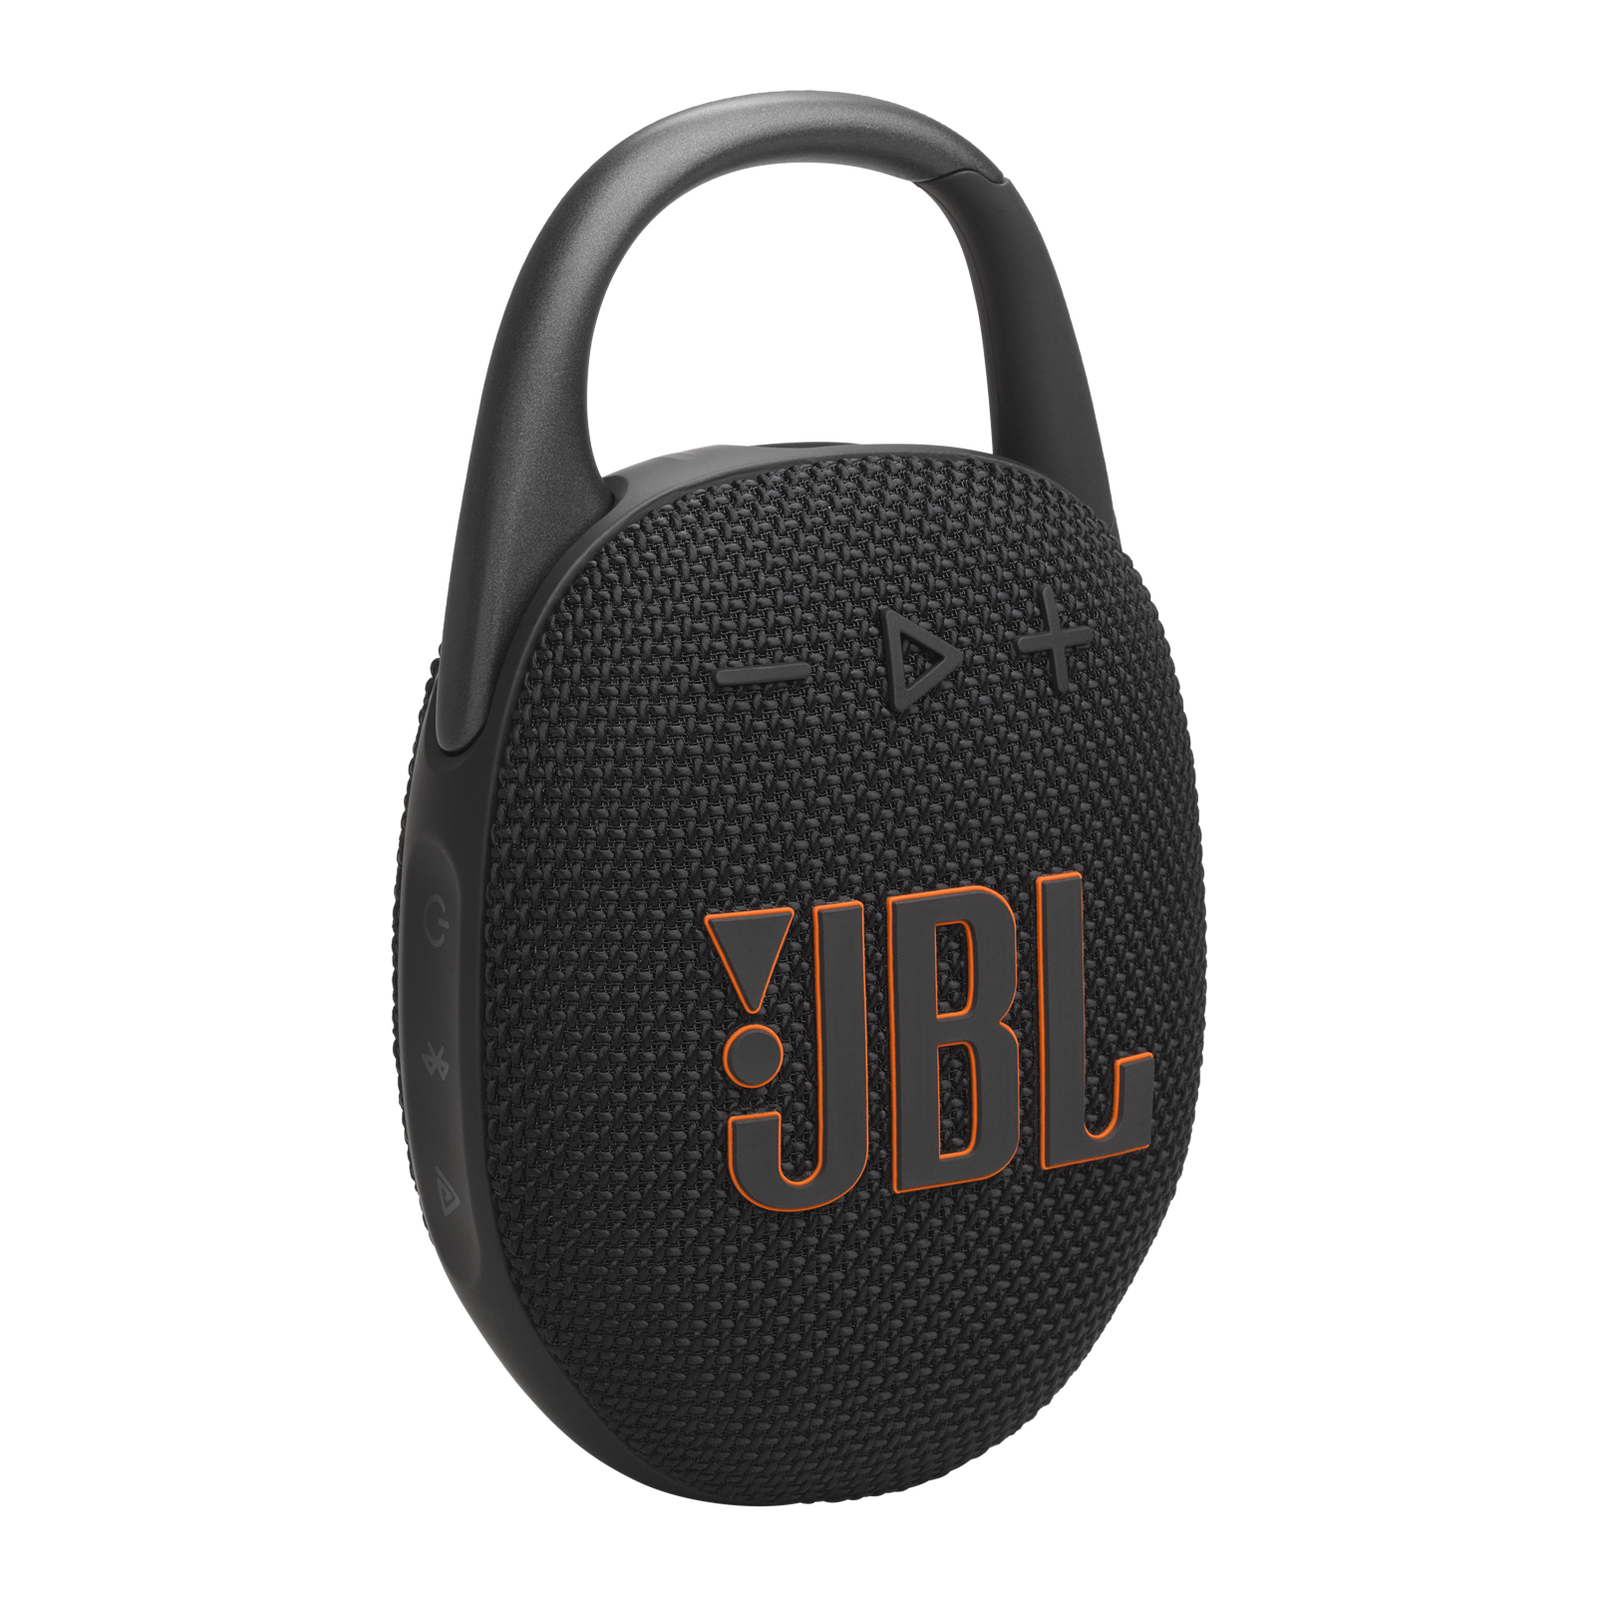 JBL Clip 5 Black Bluetooth Speaker